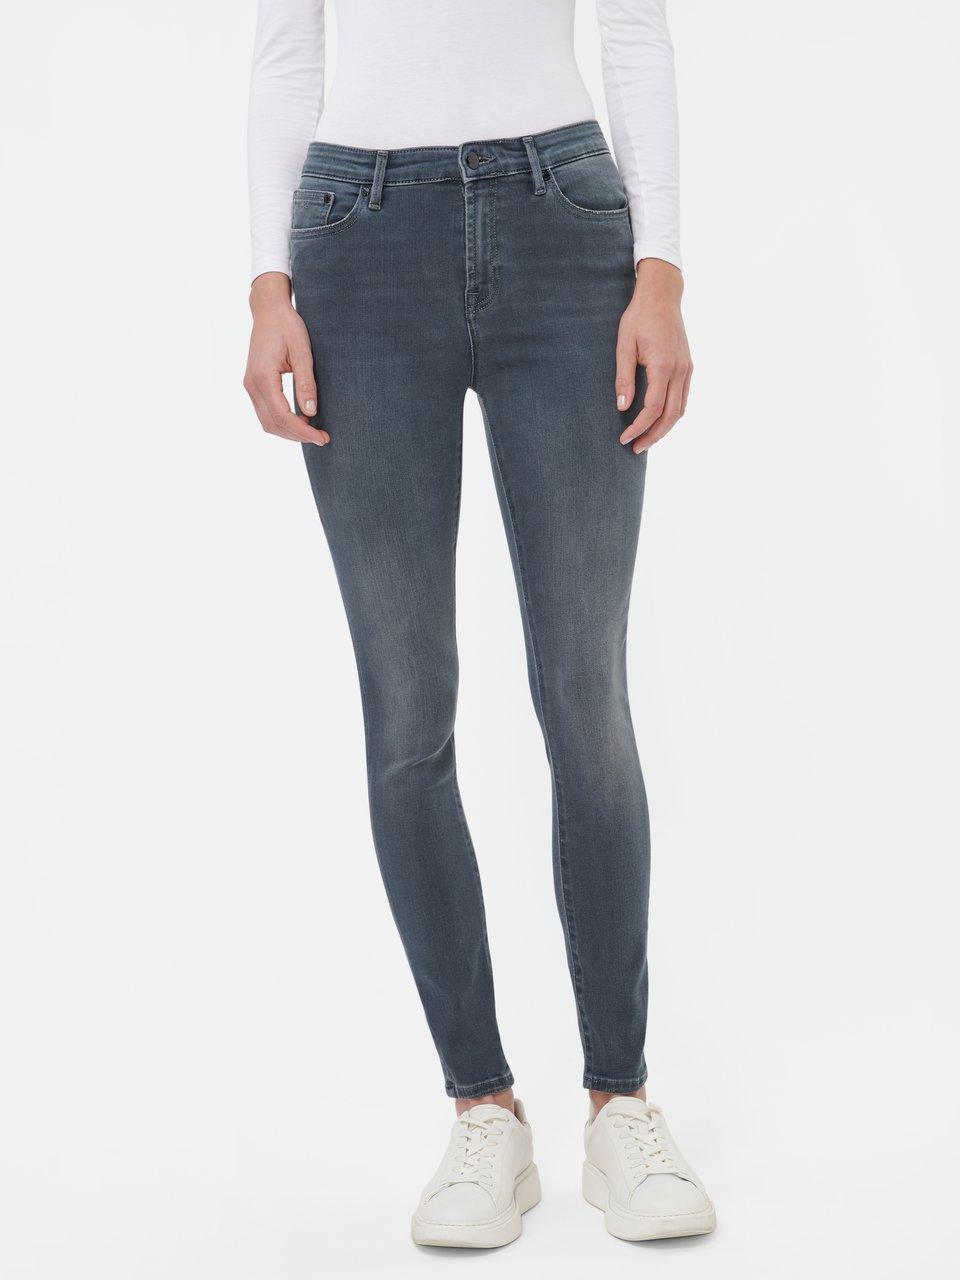 Denham - Jeans 'Needle' in inchlengte 30